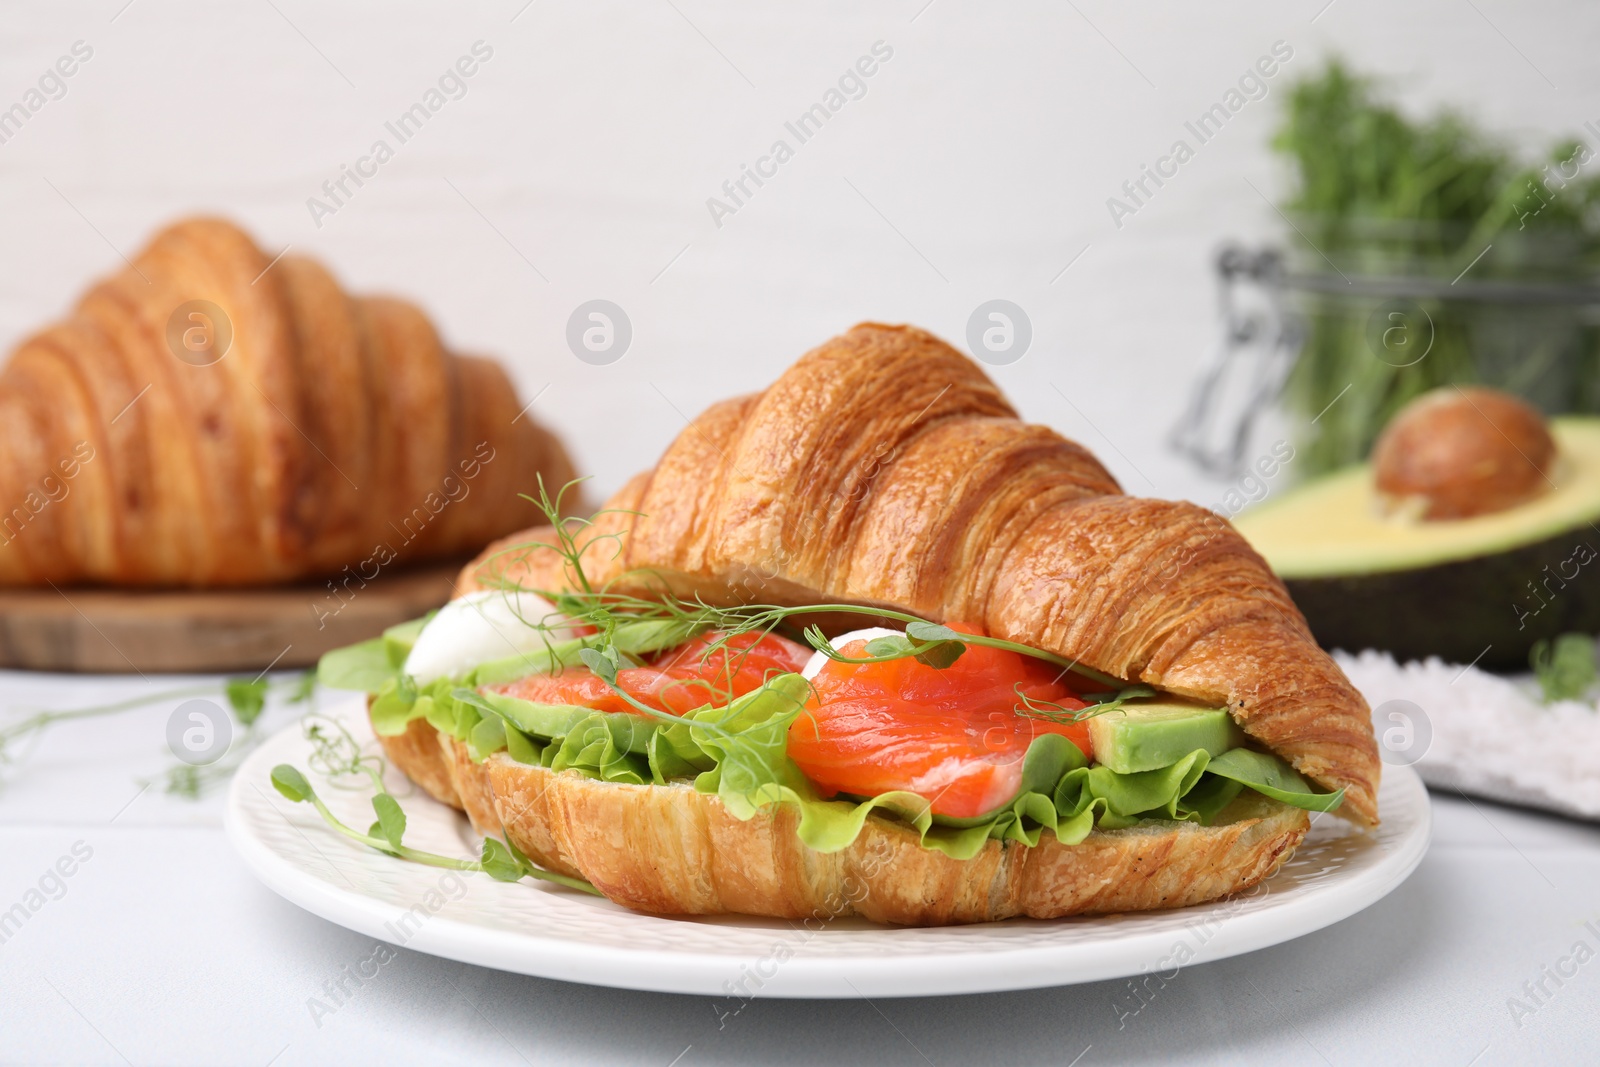 Photo of Tasty croissant with salmon, avocado, mozzarella and lettuce on white table, closeup